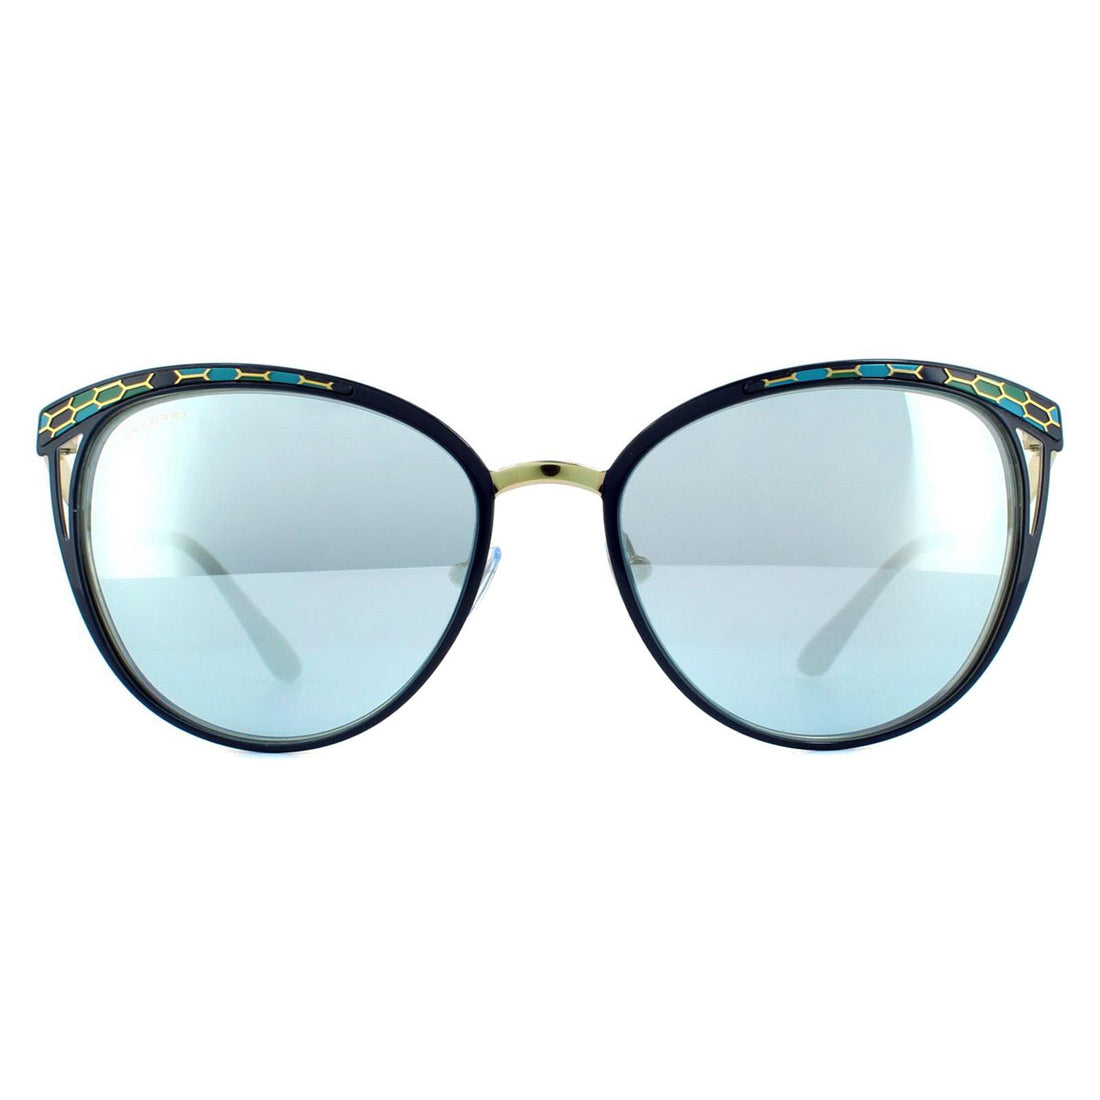 Bvlgari BV6083 Sunglasses Blue Pale Gold / Blue Mirror White